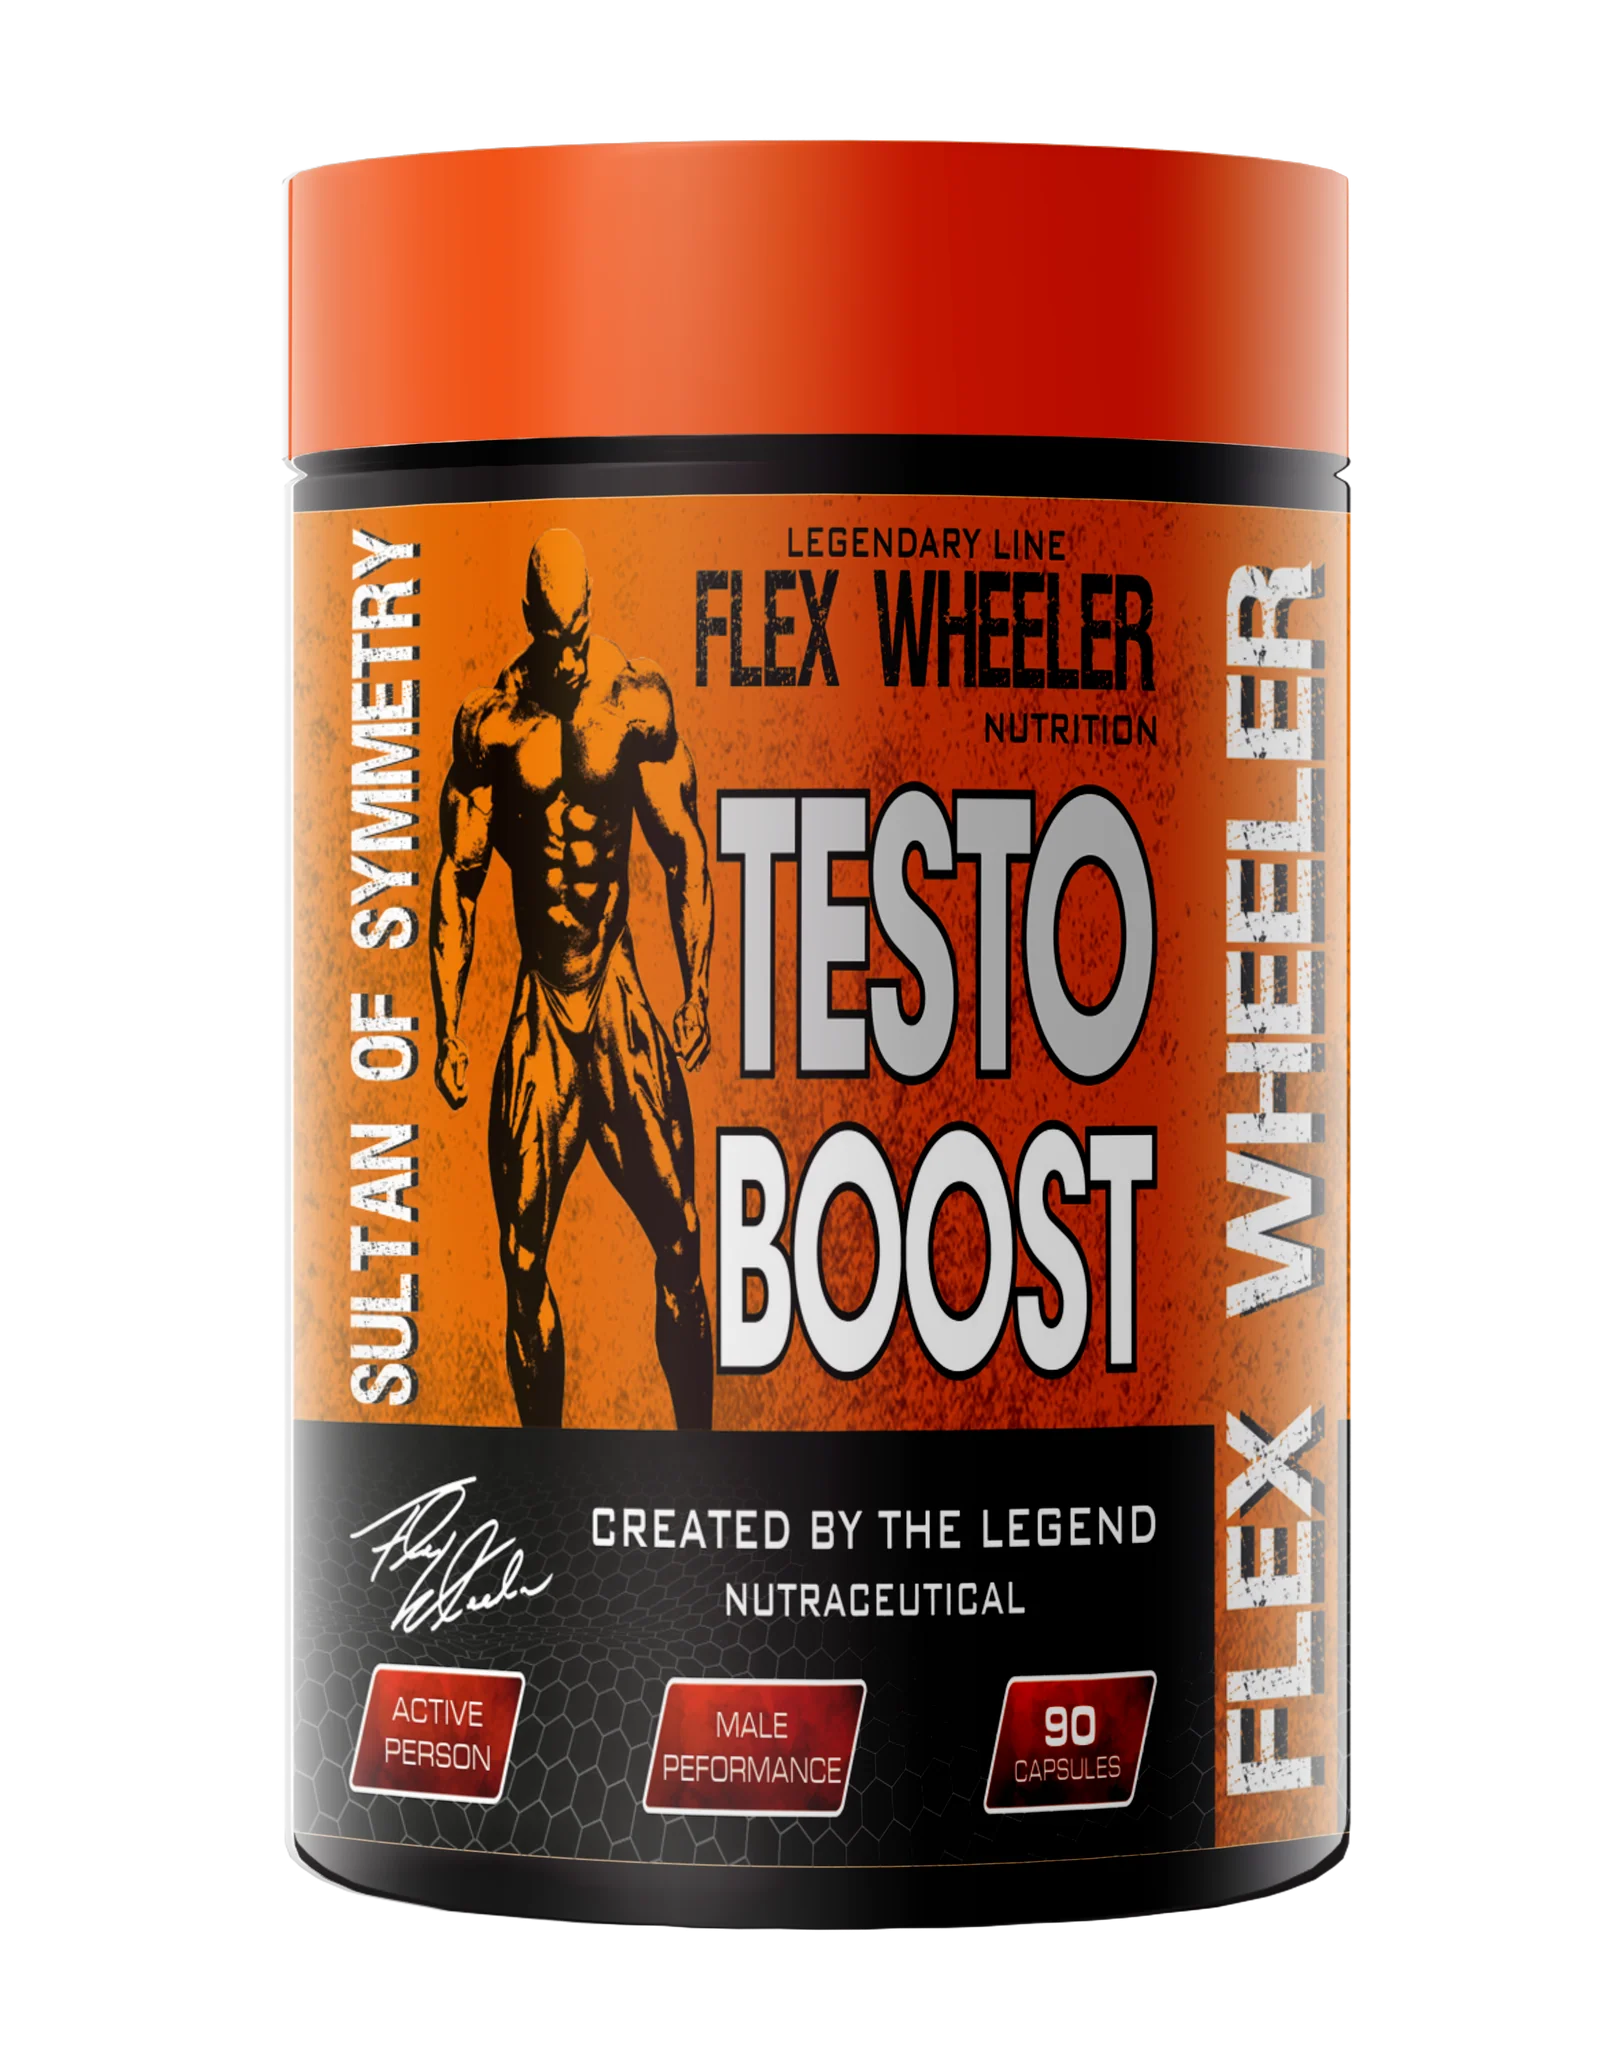 Flex Wheeler Legendary Testo Boost Testosterone Booster For Men - 90 Capsules